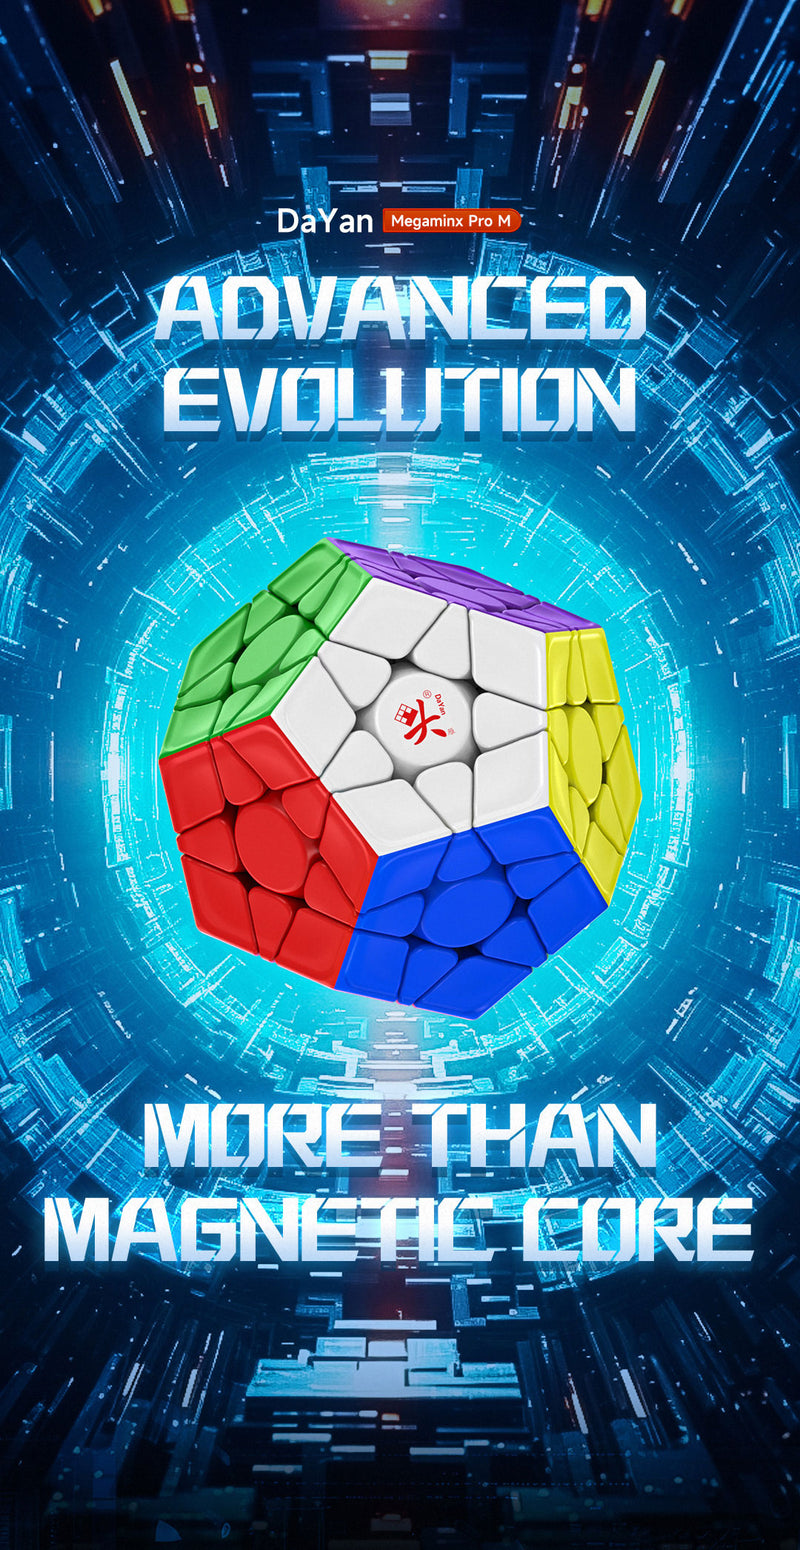 DaYan Megaminx Pro M Advanced Evolution